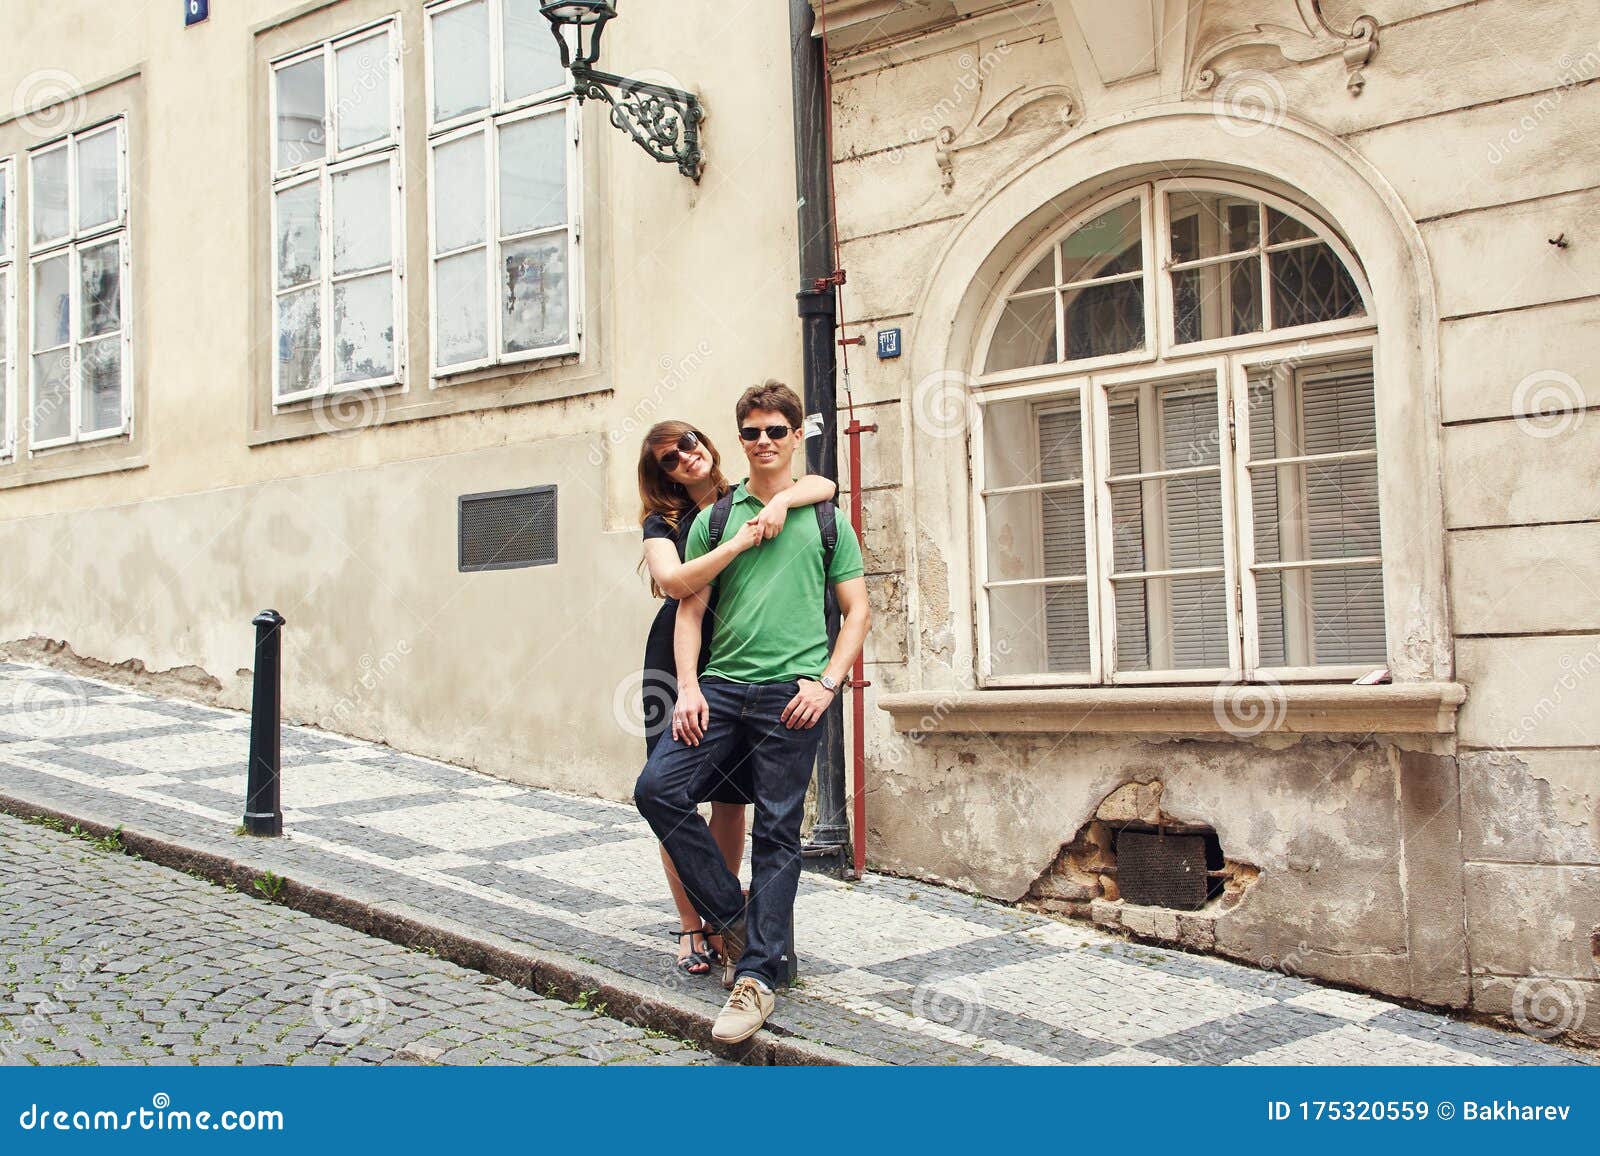 Czech streets couple